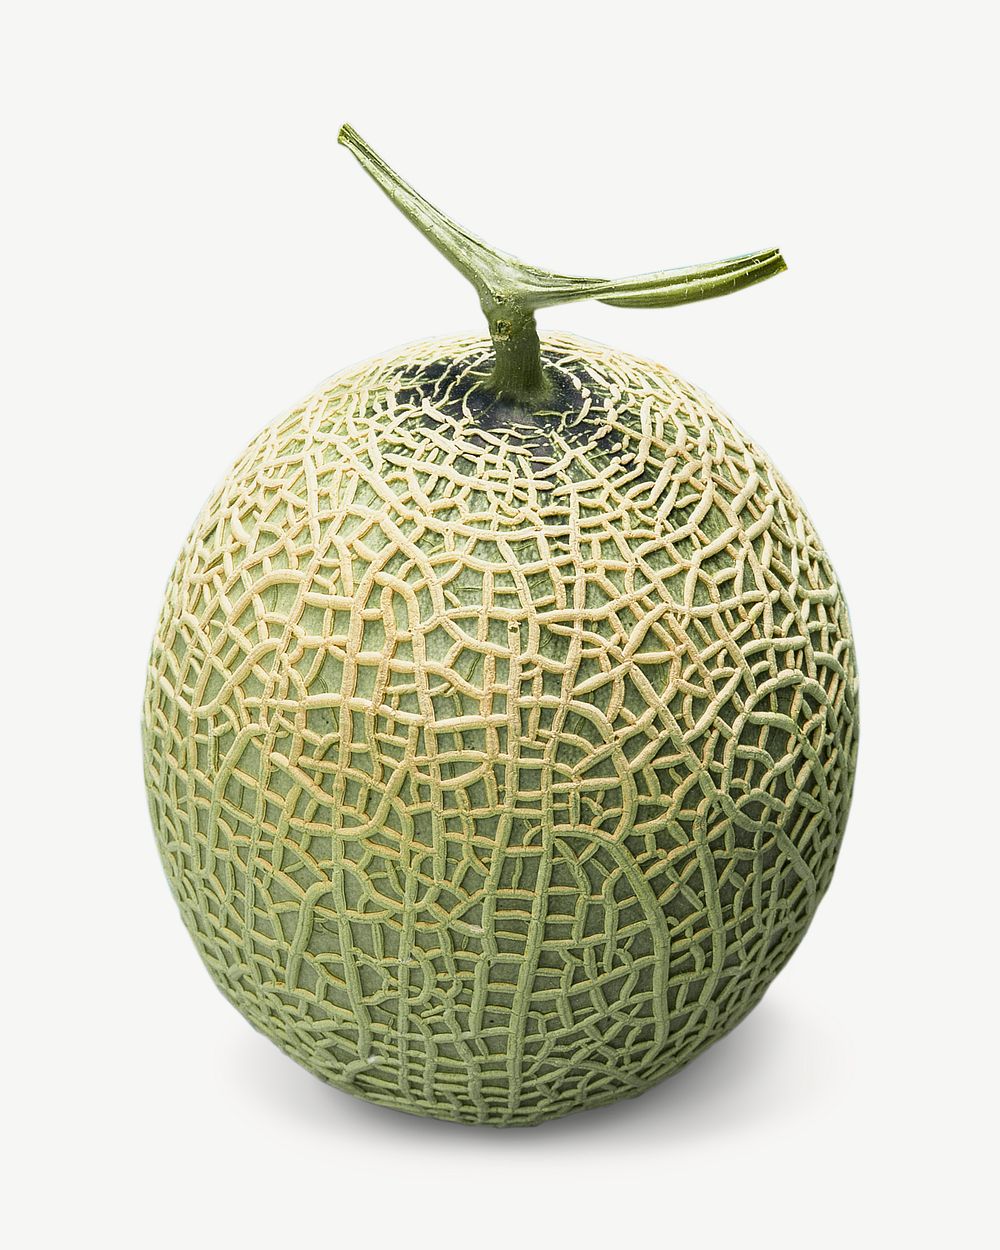 Melon image graphic psd